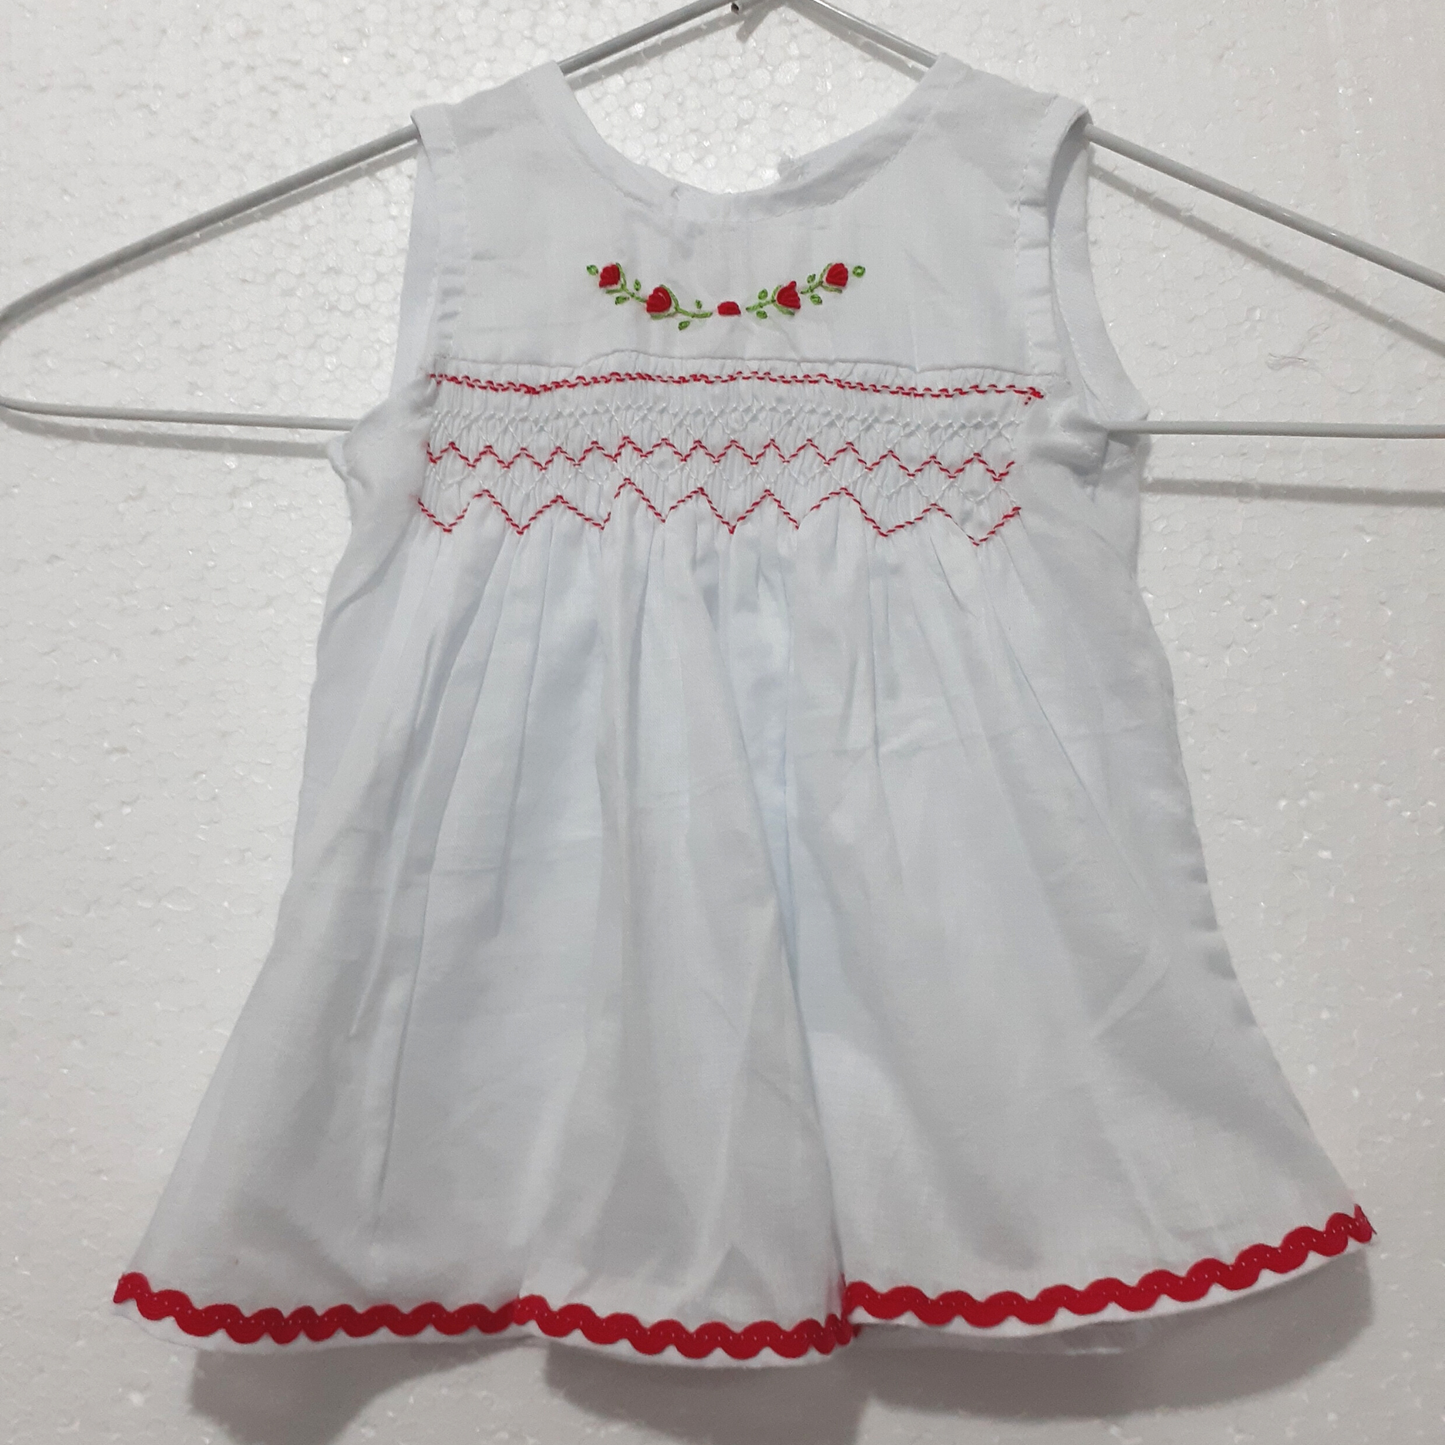 Handmade Smocked Newborn Dress Collection - 0 to 3 months